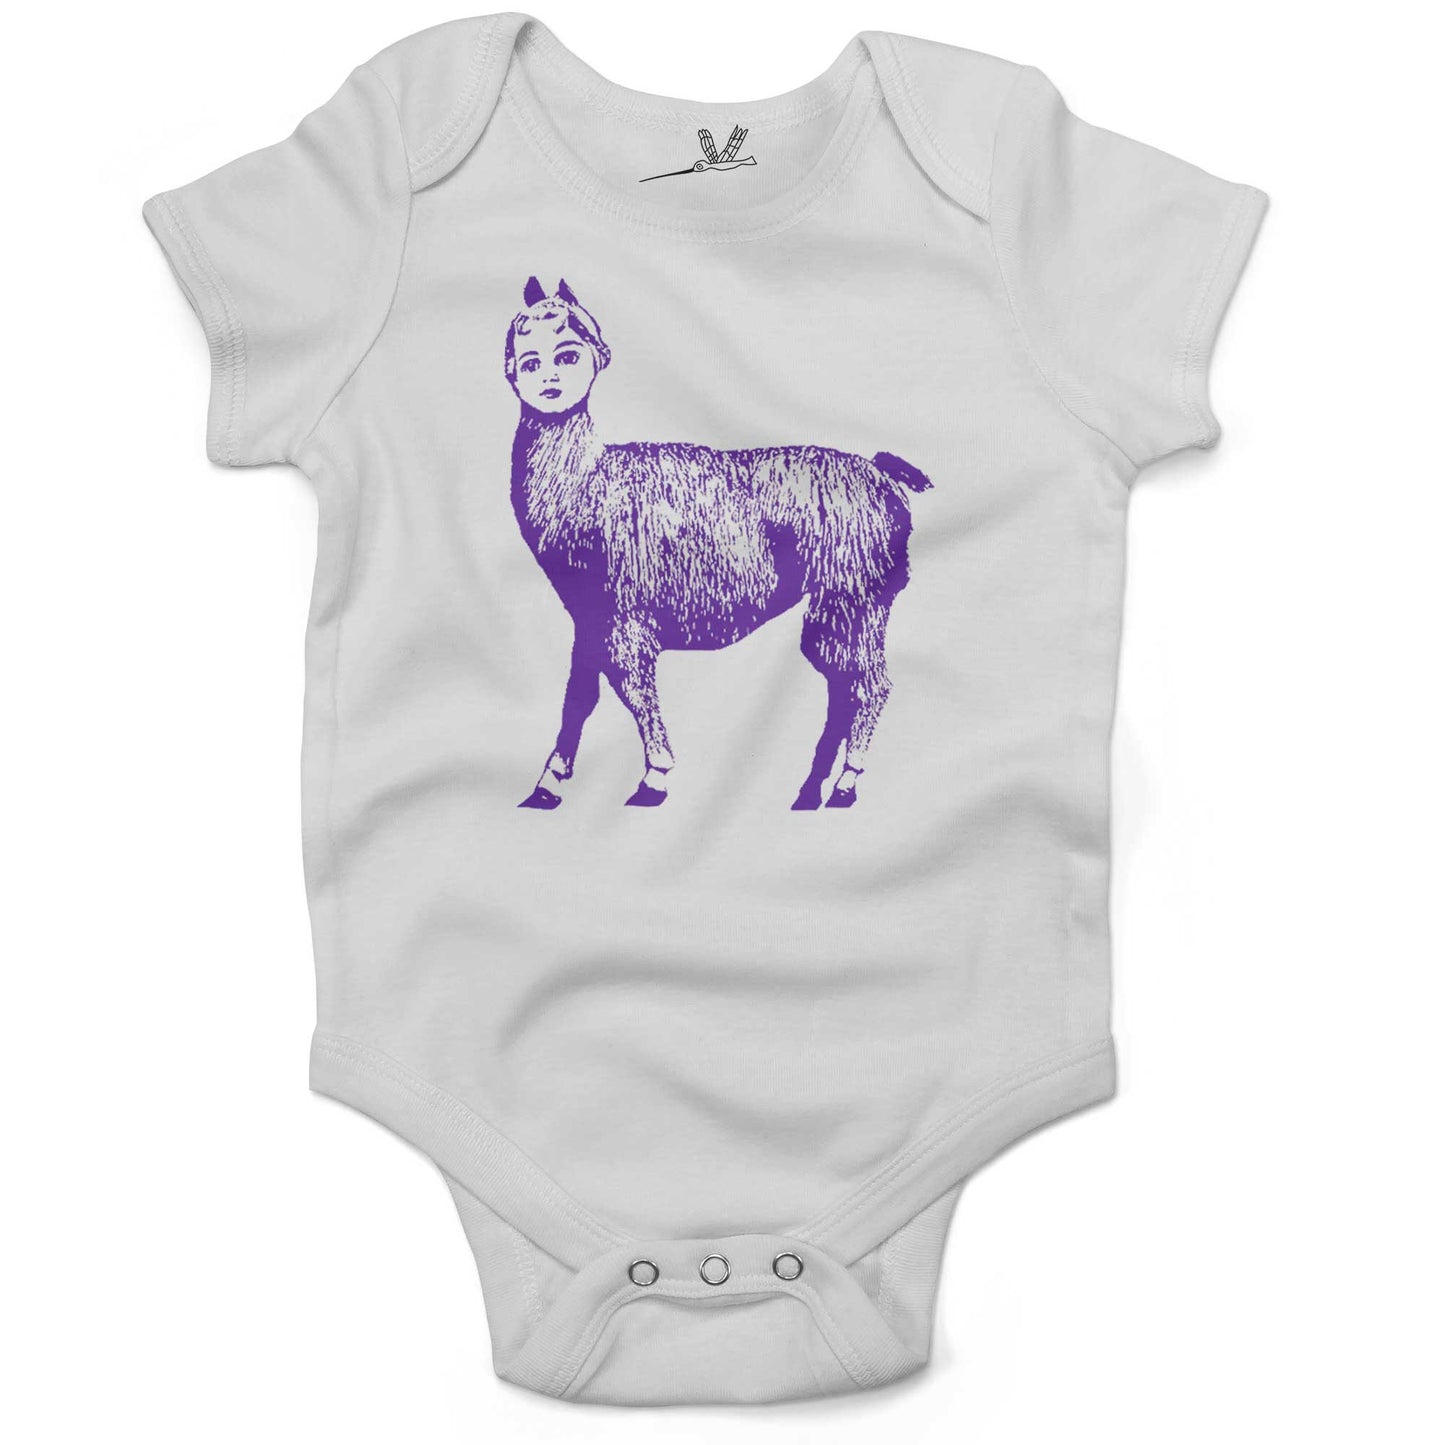 Dolly Llama Infant Bodysuit or Raglan Baby Tee-White-3-6 months